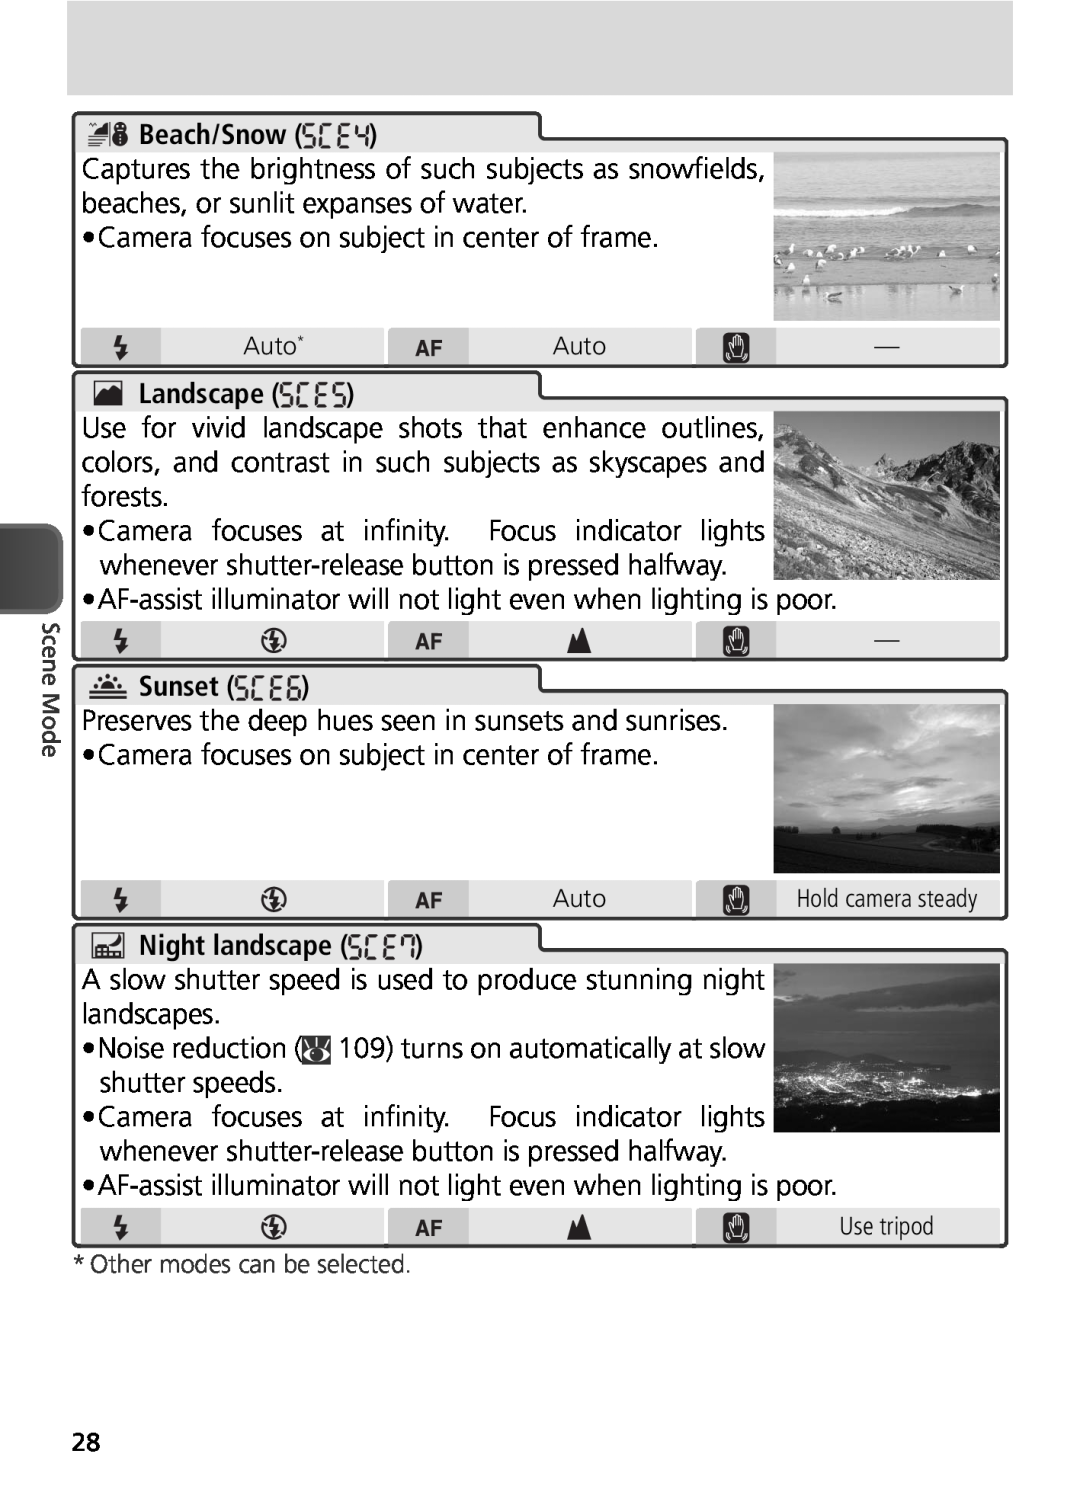 Nikon COOLPIX8800 manual Beach/Snow, Landscape, Sunset, Night landscape 